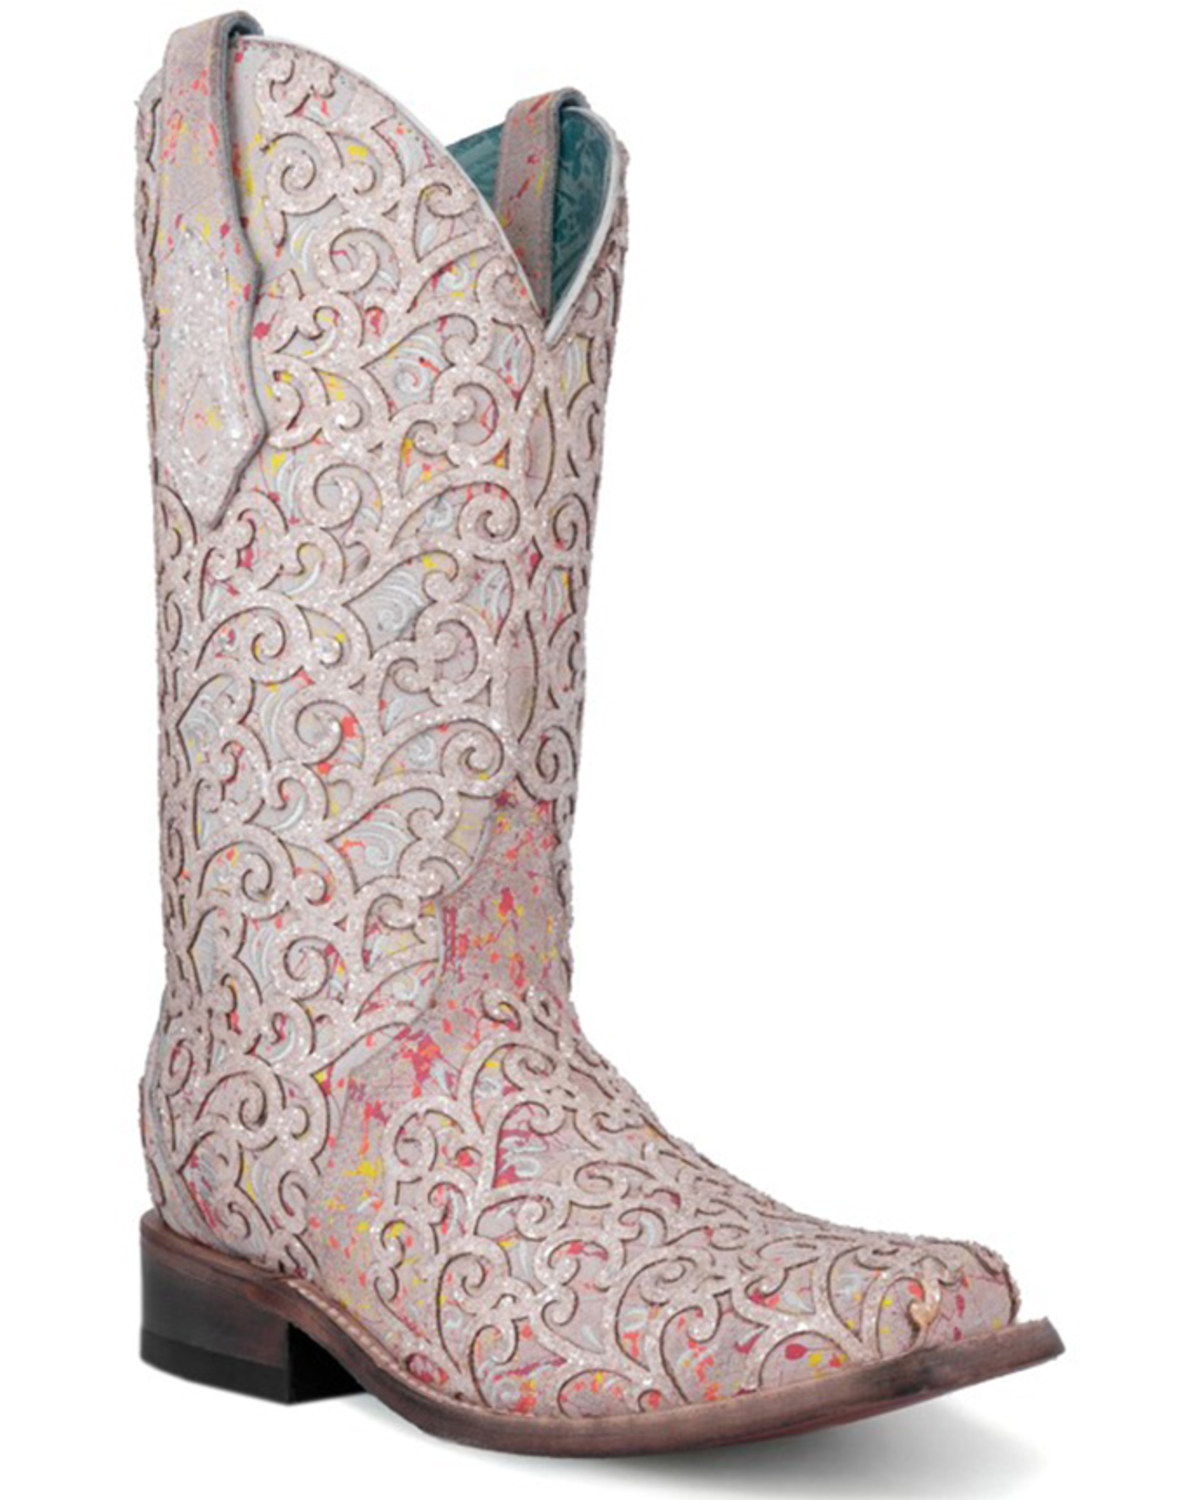 Corral Women's Glitter Overlay Neon Blacklight Western Boots - Square Toe